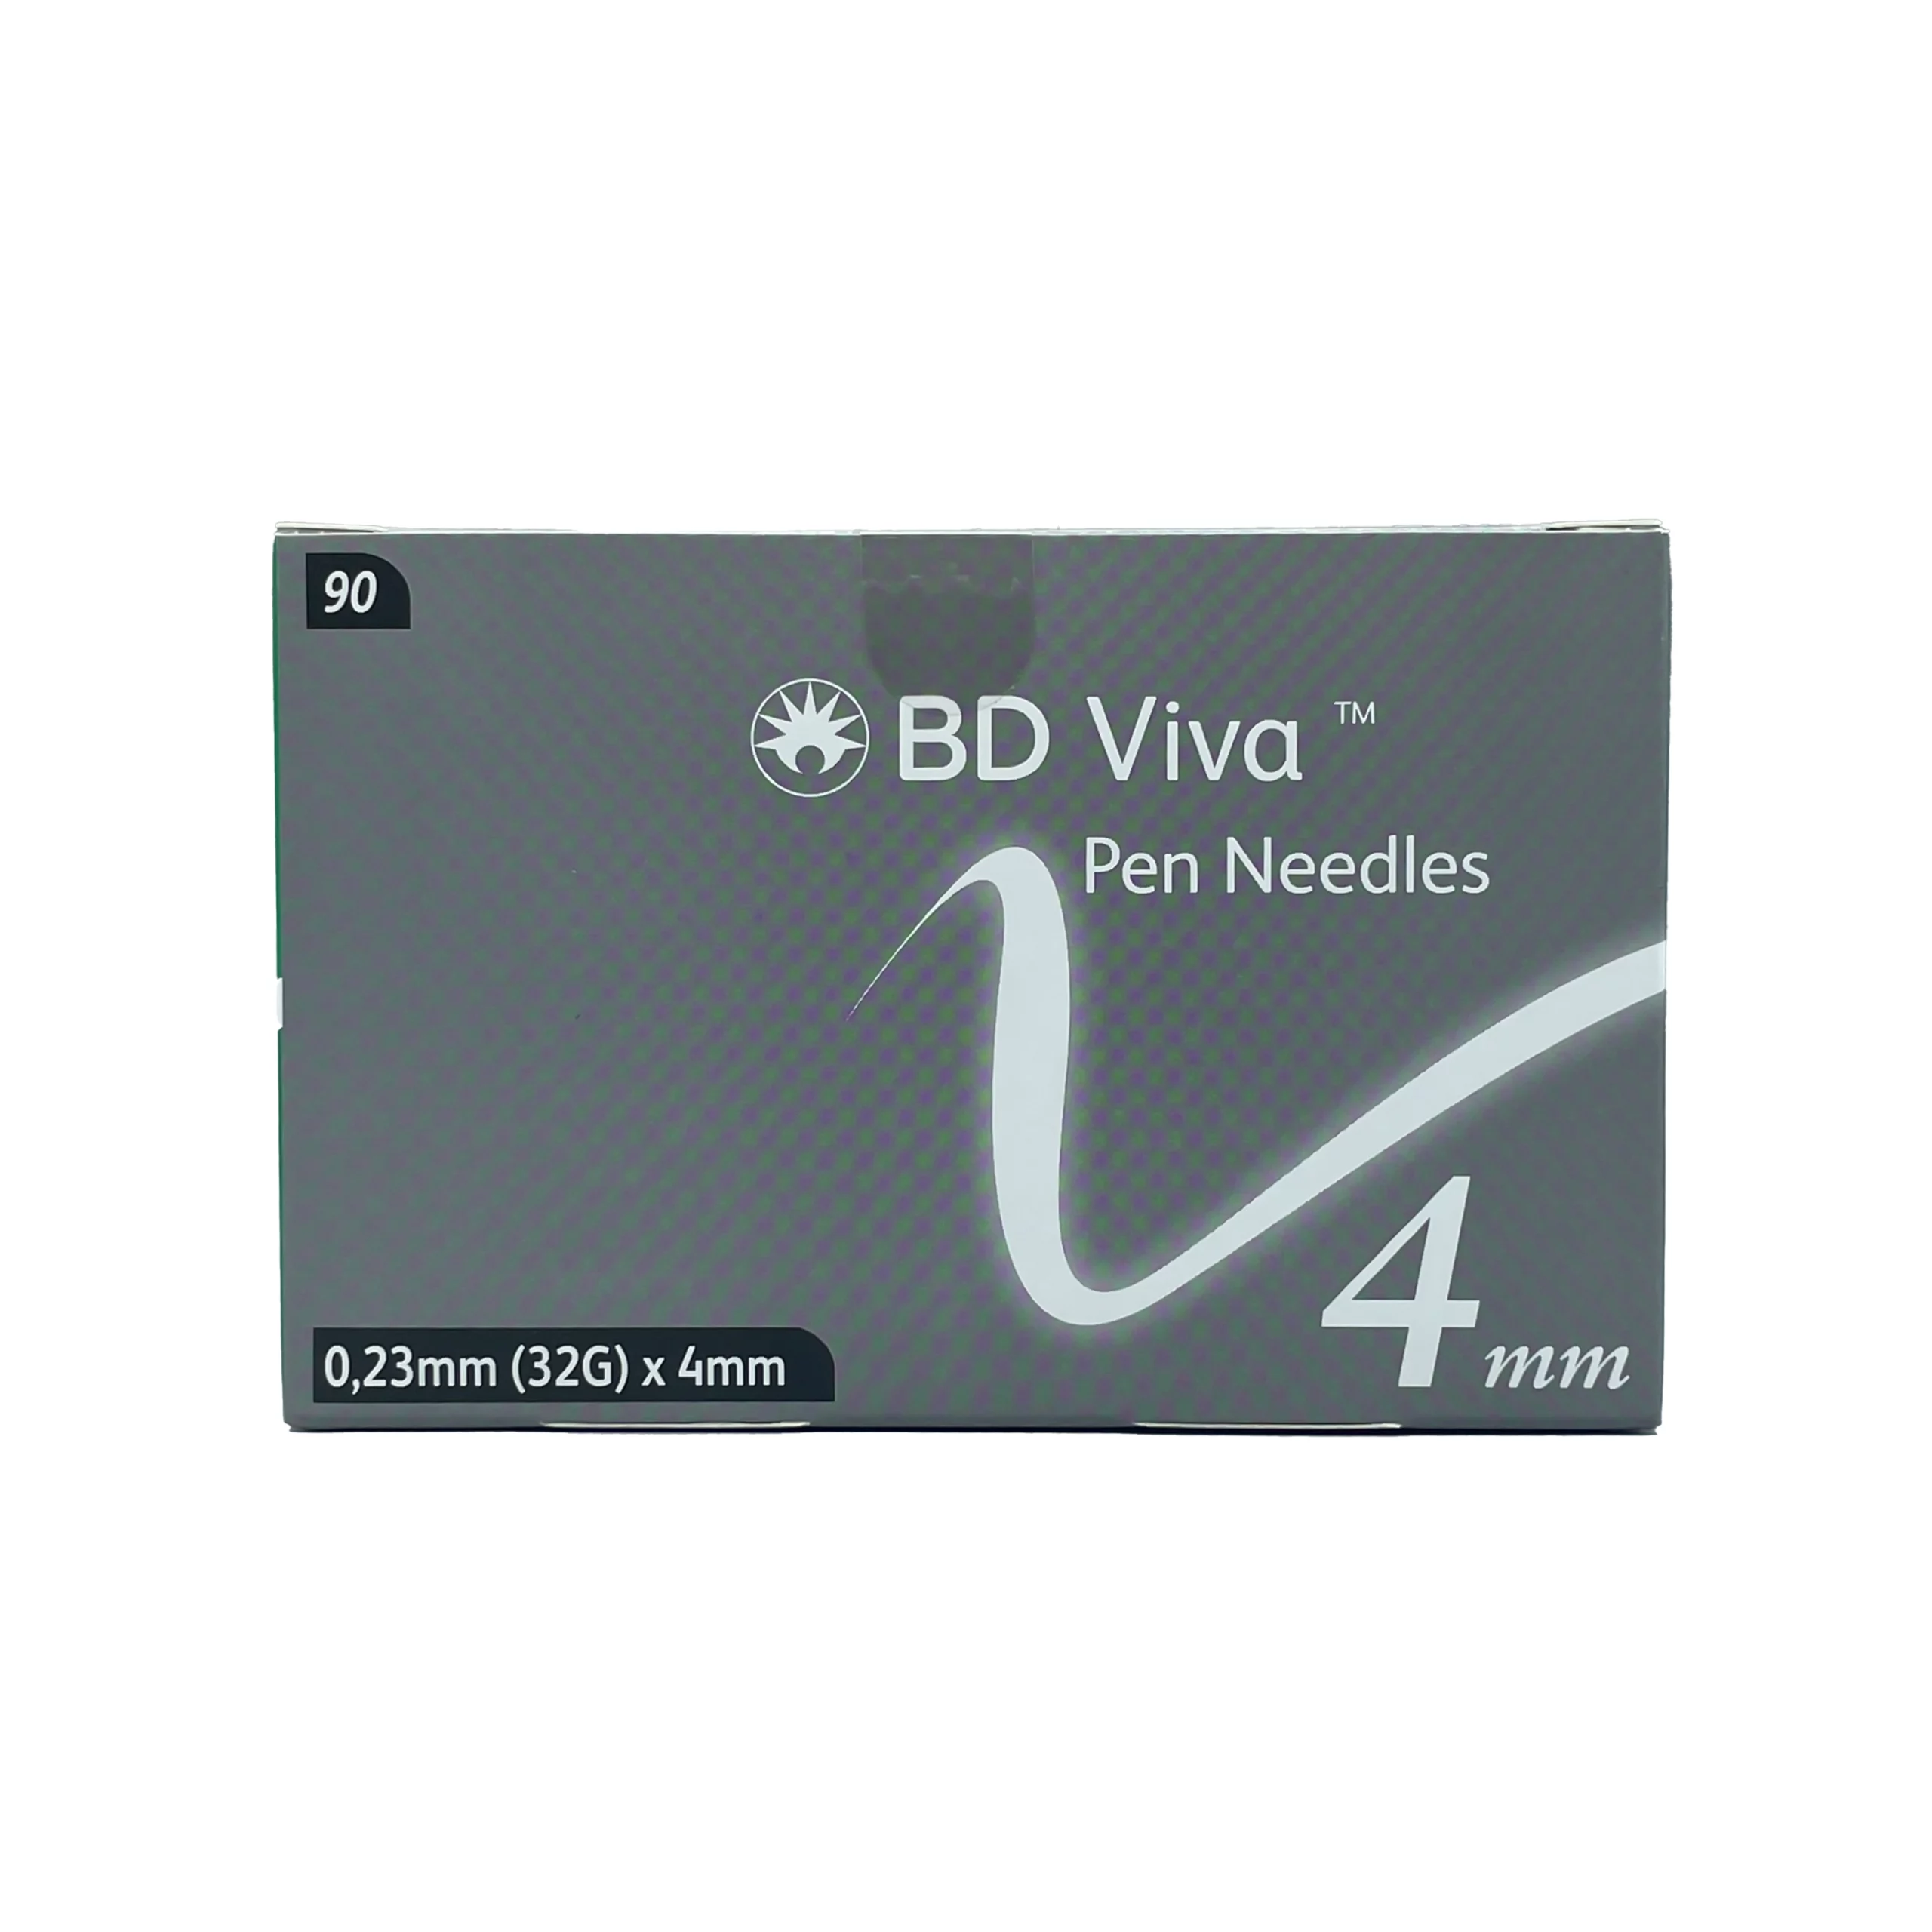 BD Viva 4mm Pen Needles (60)